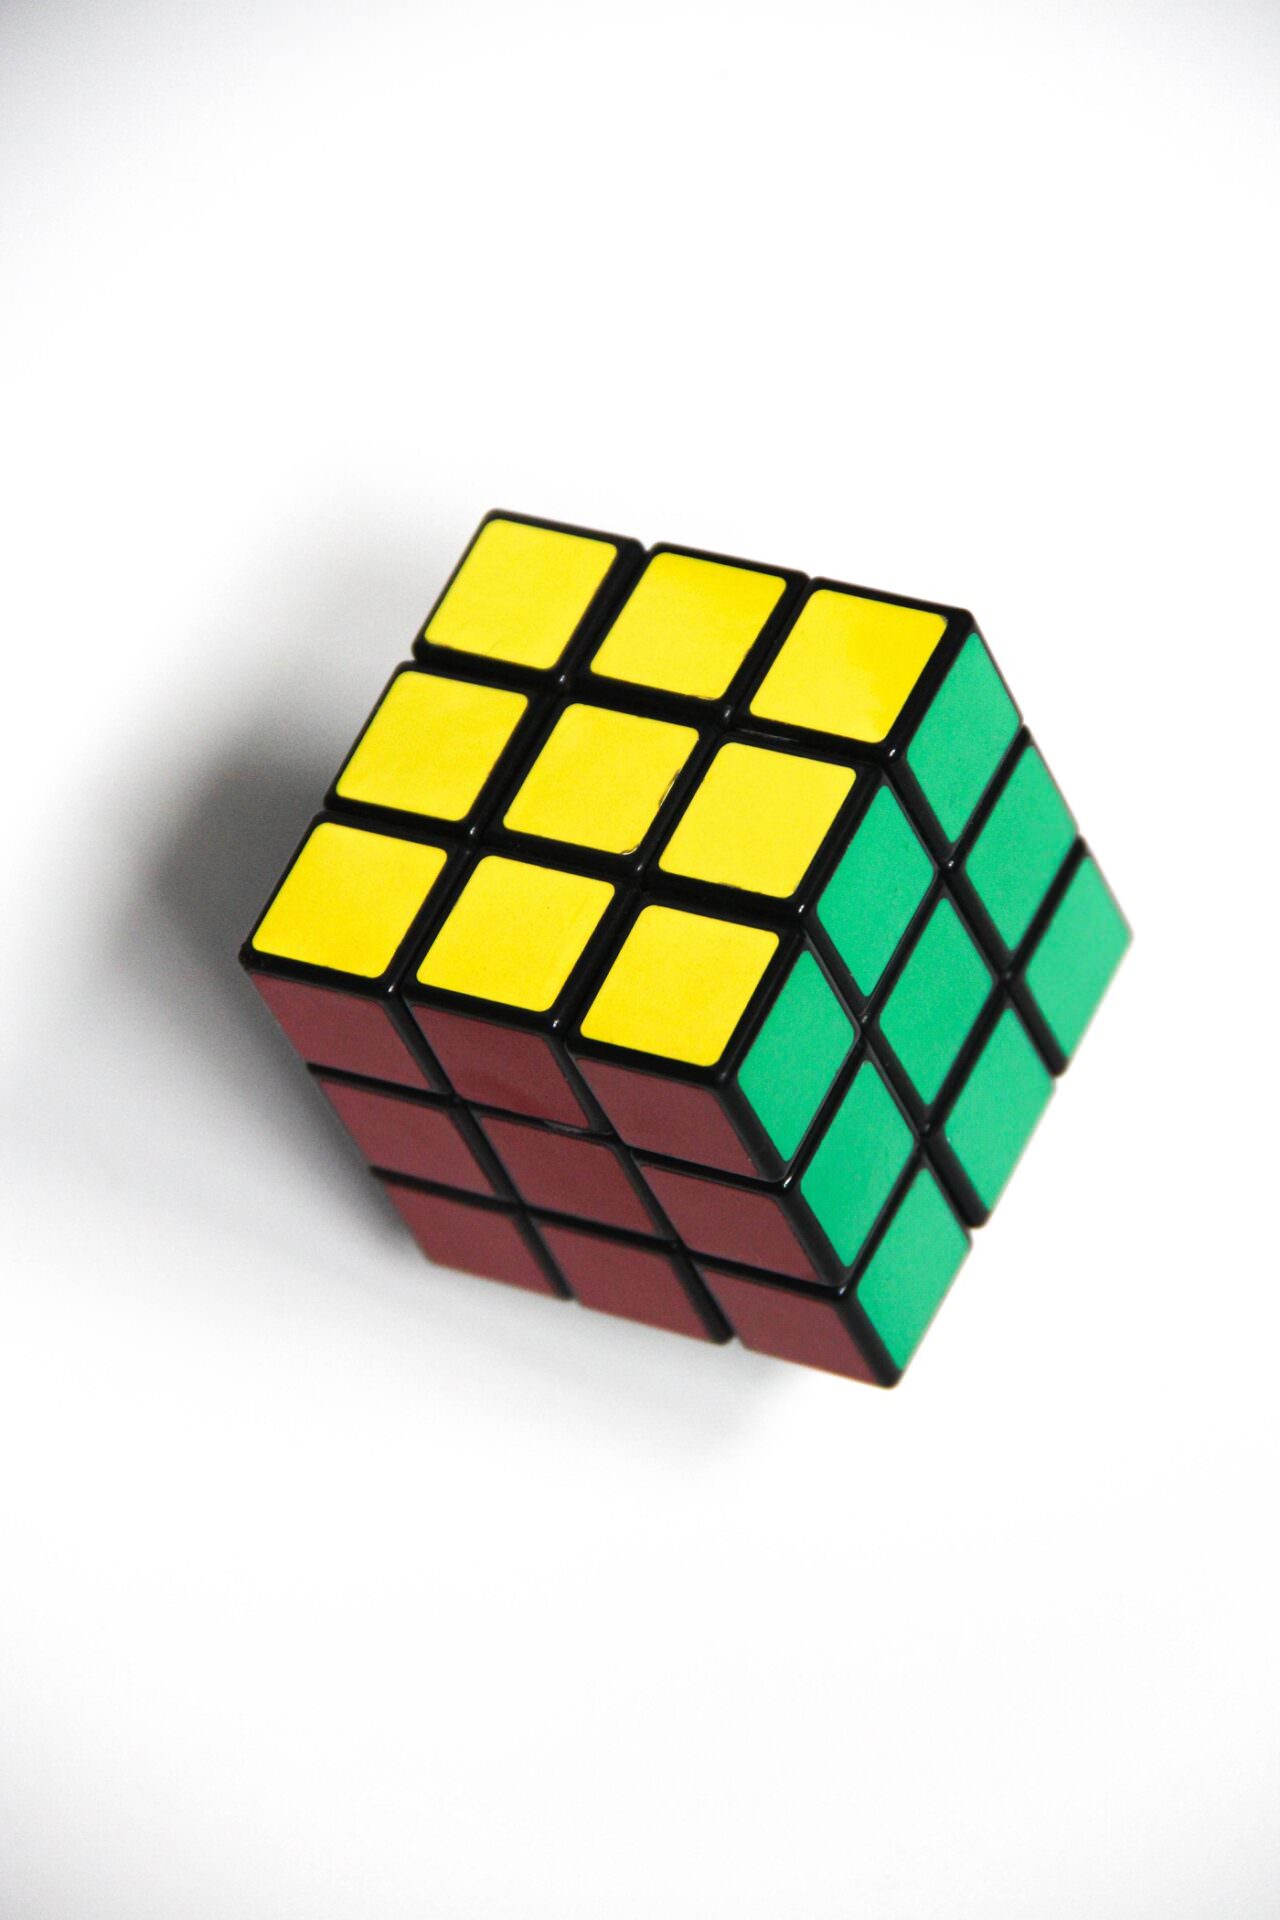 Rubikova kocka, AI